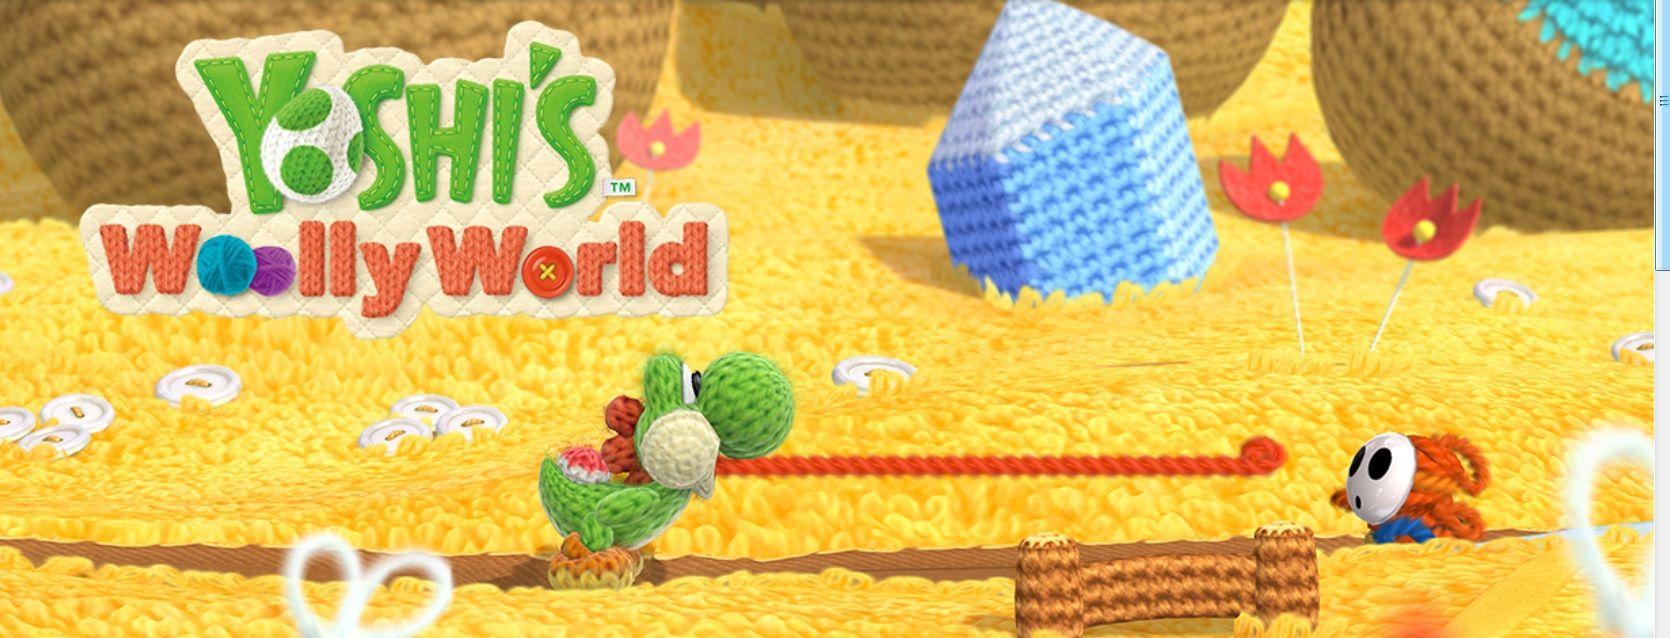 Yoshi's Woolly World HD Wallpaper 11 X 638